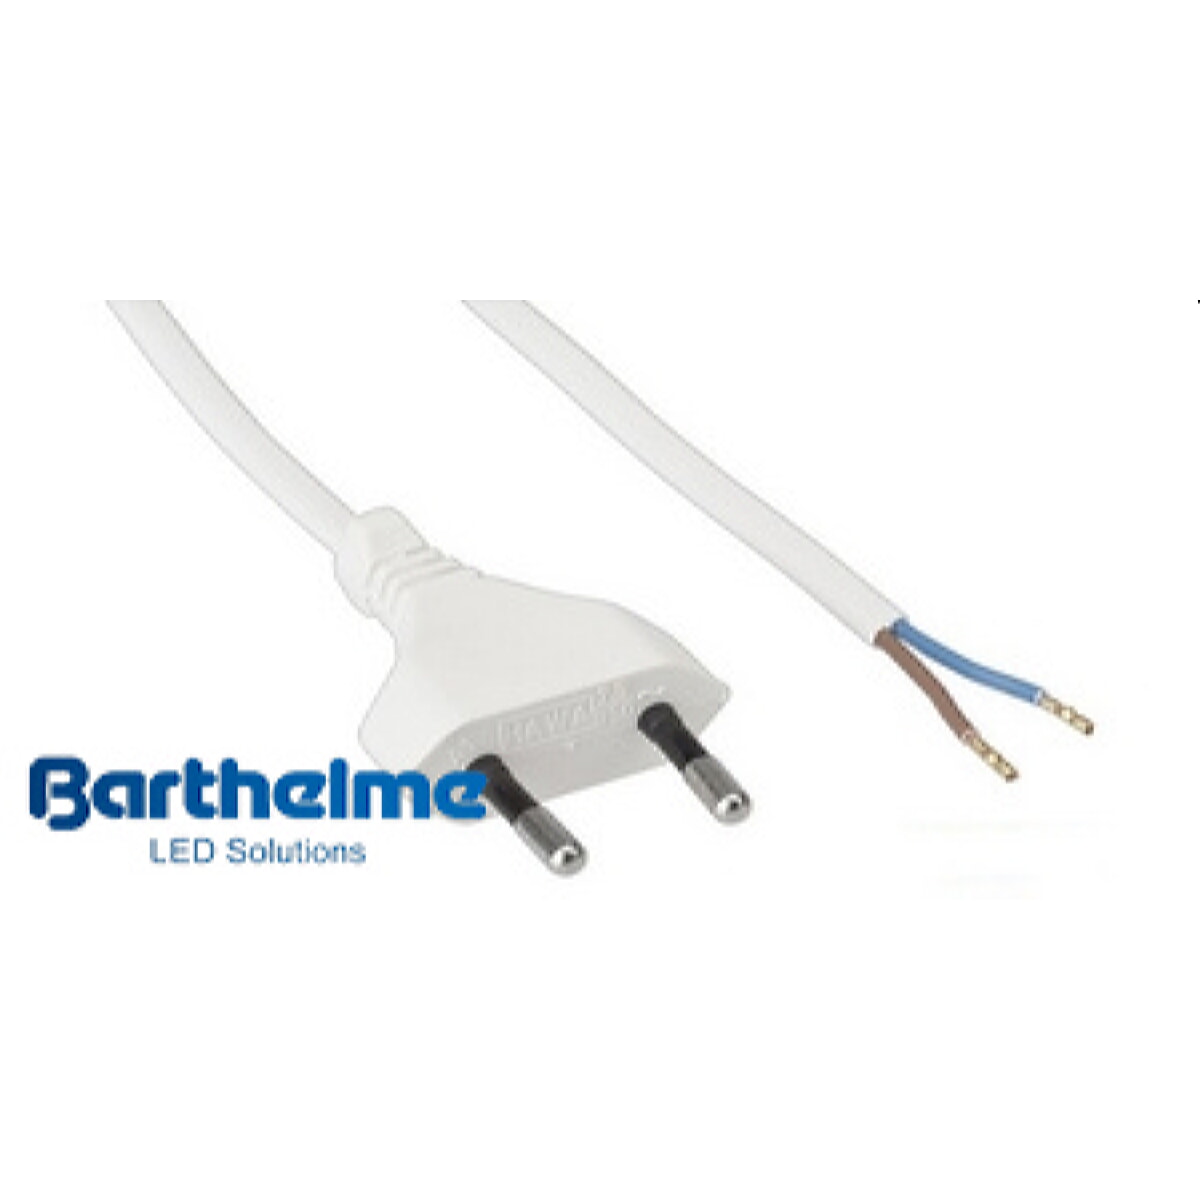 Barthelme Anschlussleitung PVC 2x0,75 200cm weiss LEDKAB34